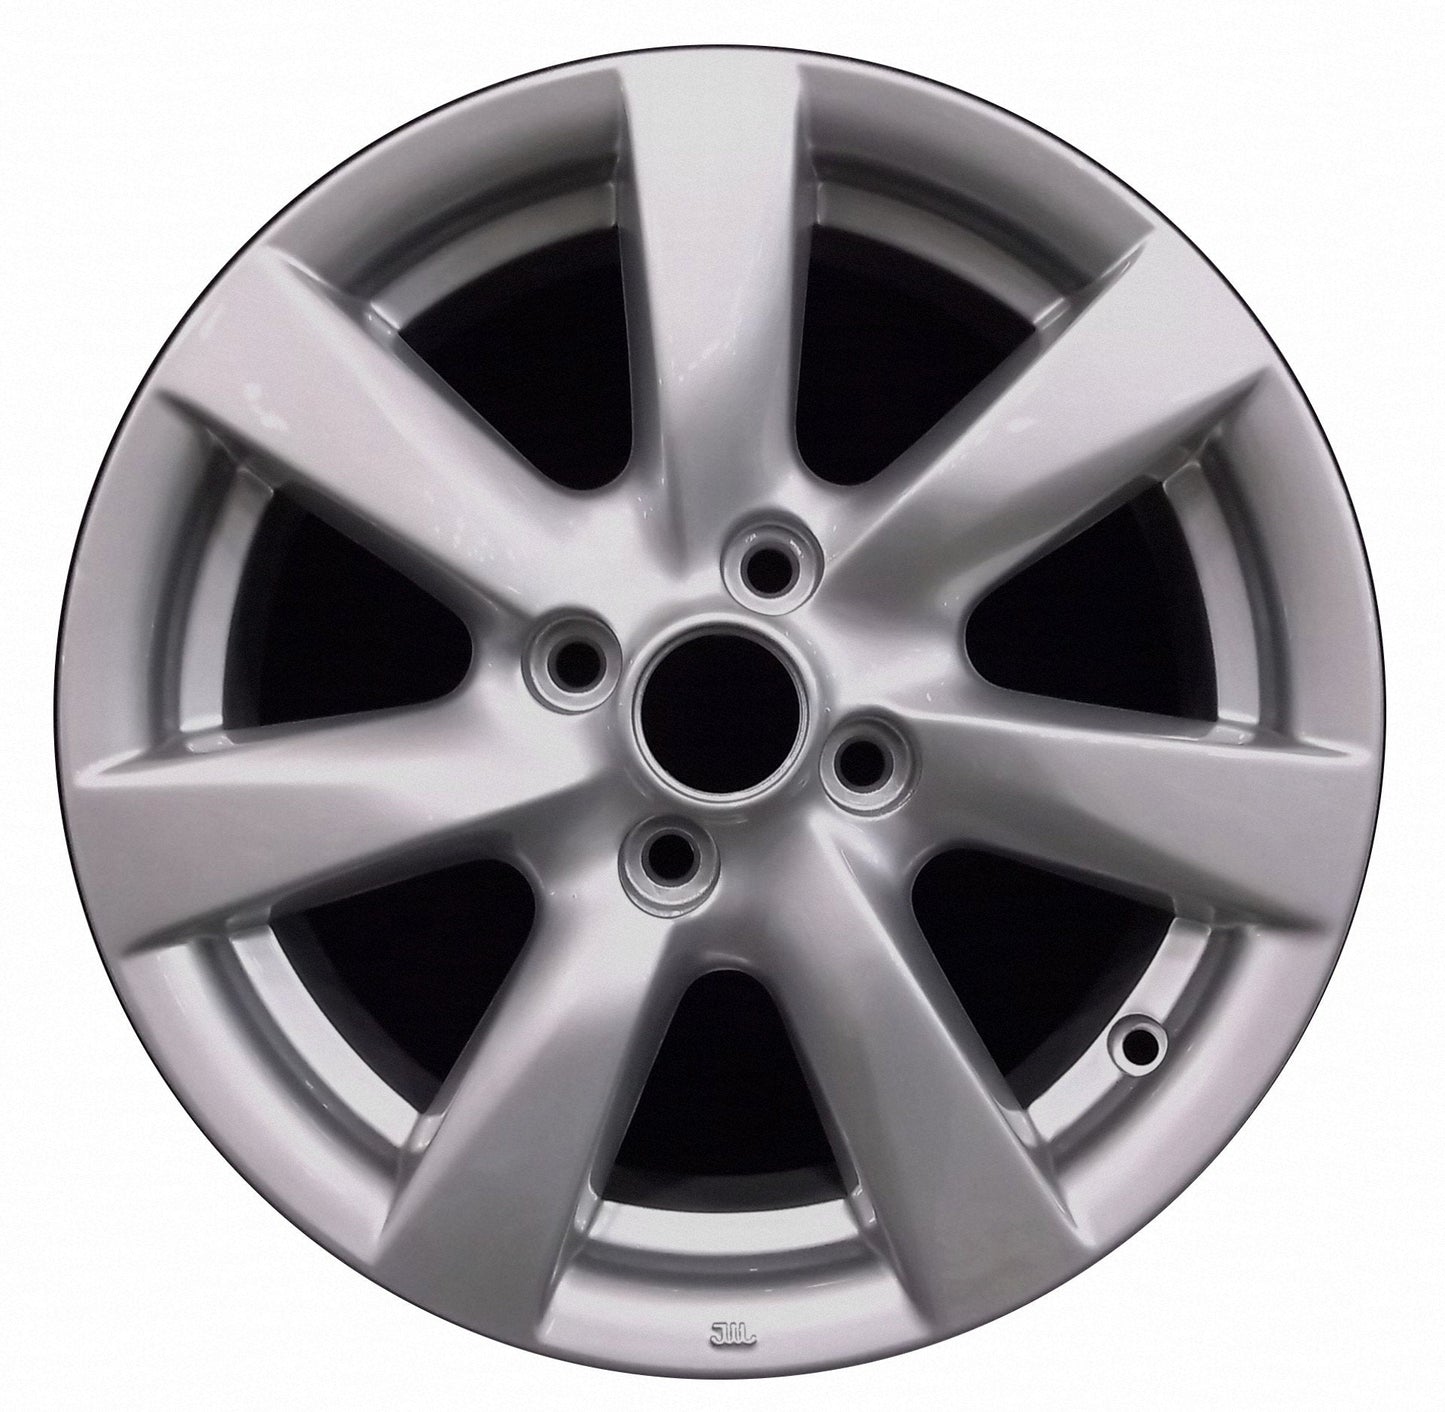 Nissan Versa  2012, 2013, 2014, 2015 Factory OEM Car Wheel Size 15x5.5 Alloy WAO.62578.LS09.FF